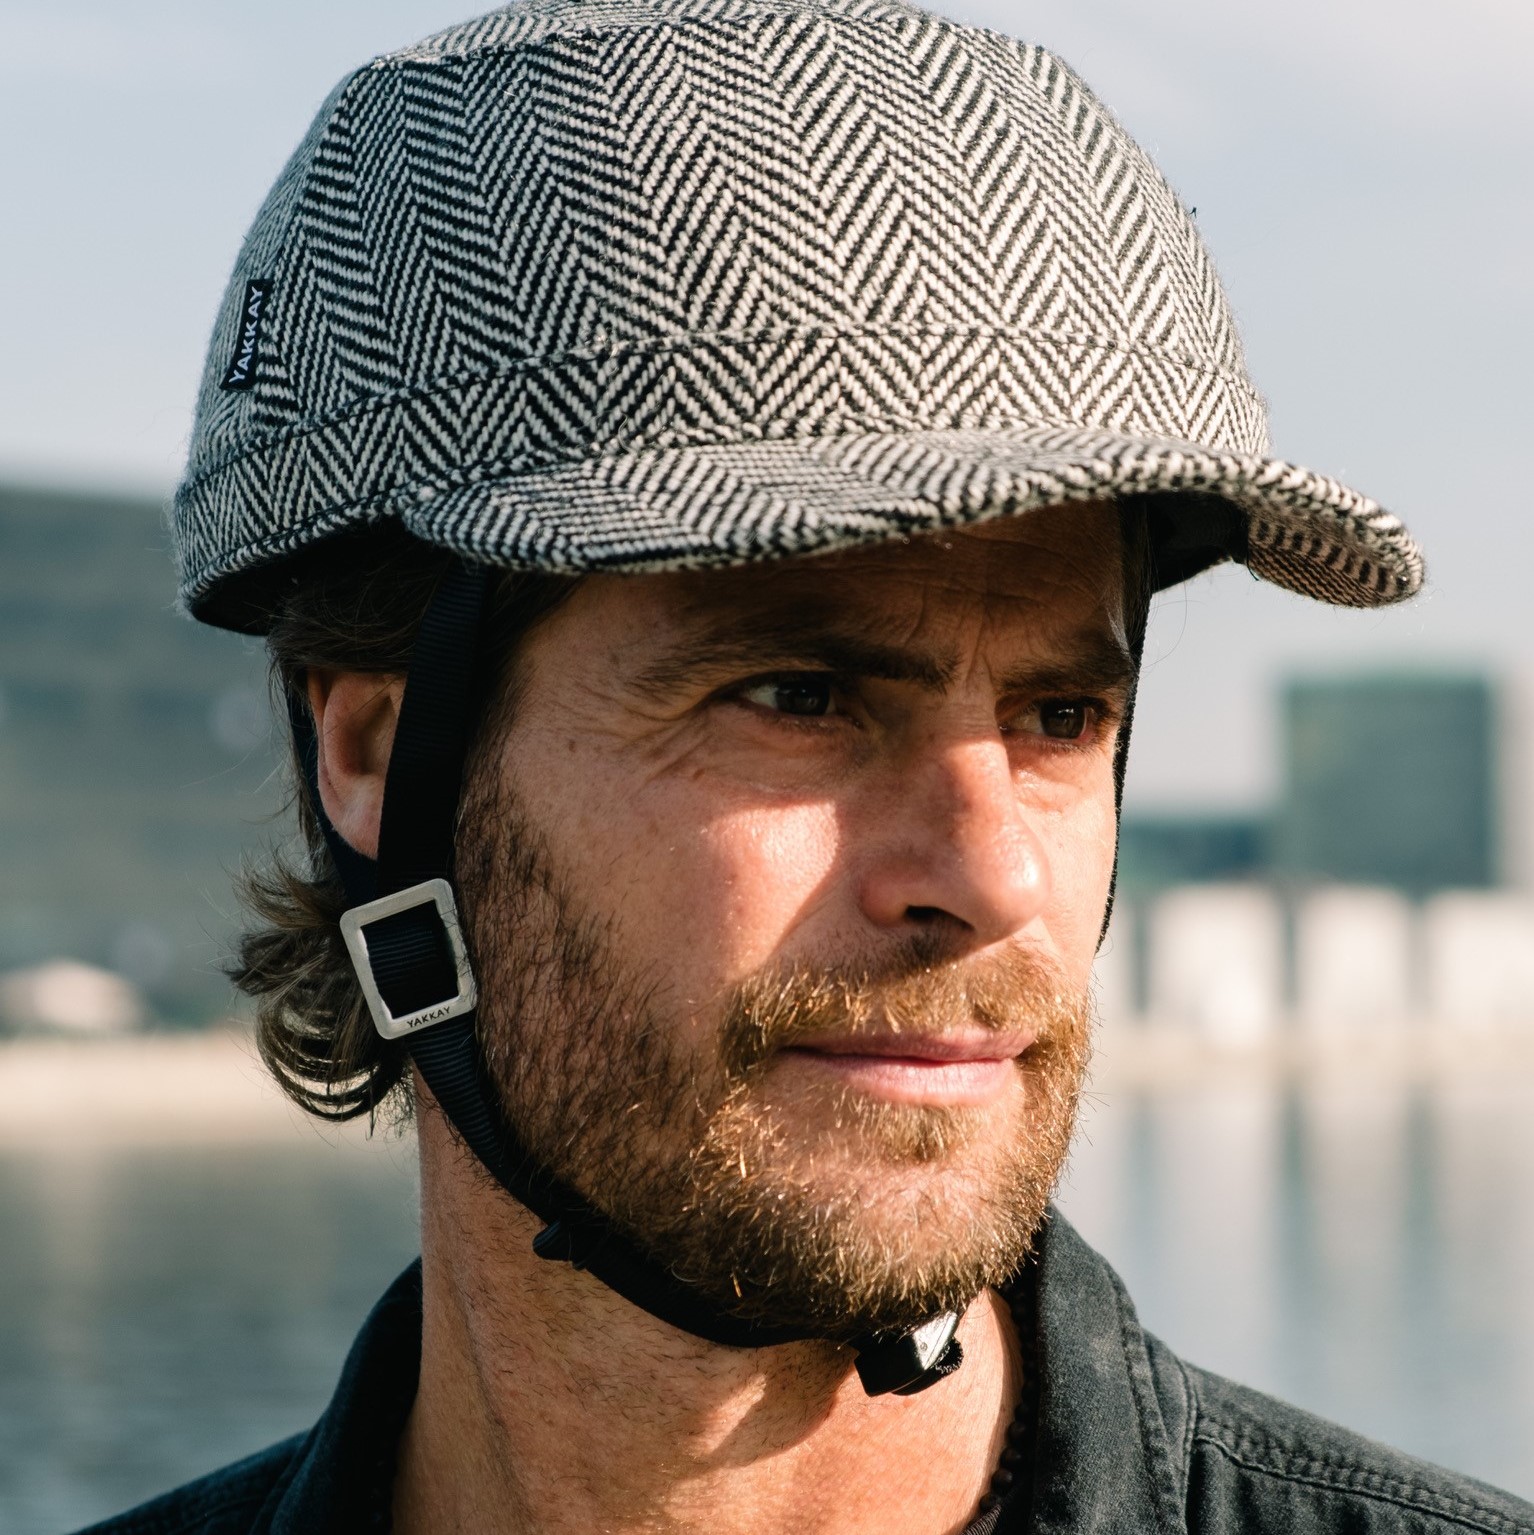 Fdx Thermal Cycling Skull Cap Hat Under Helmet Black